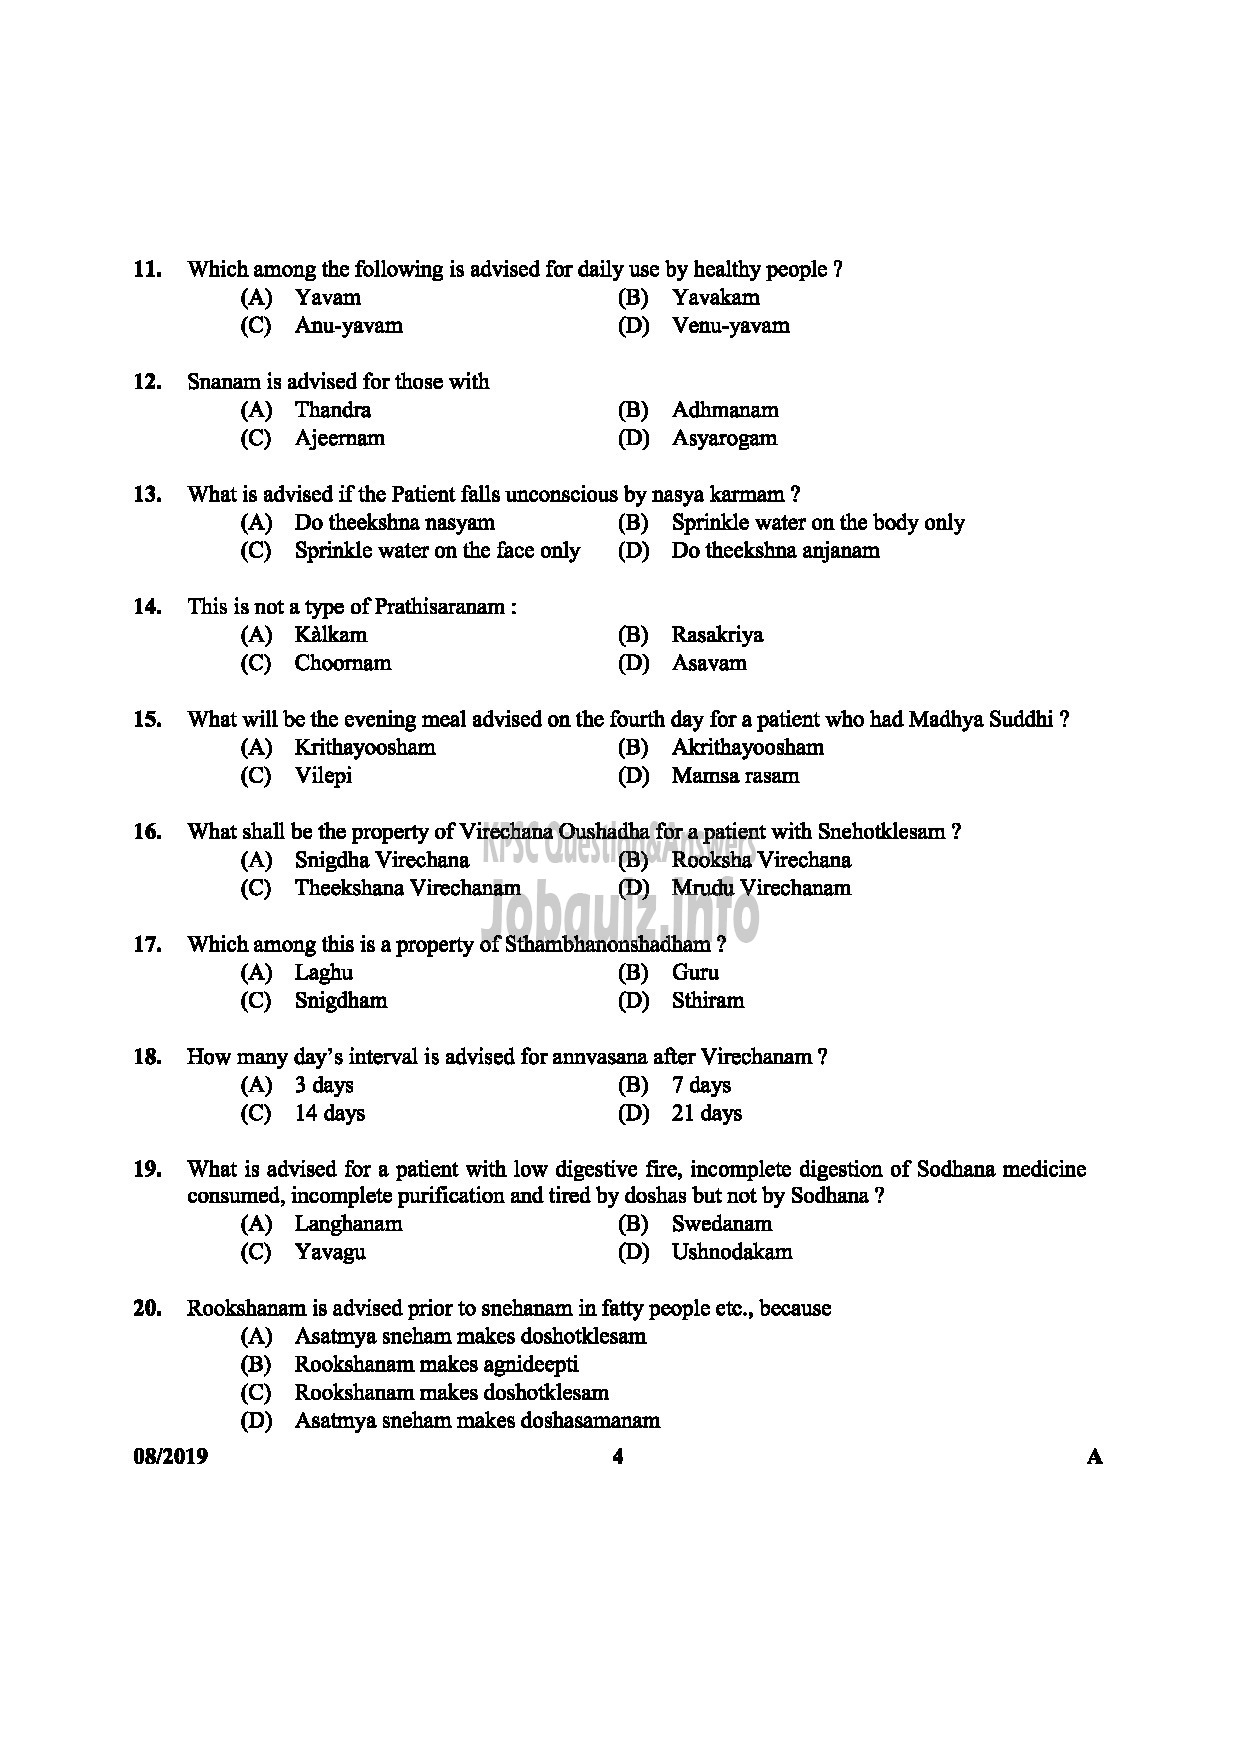 Kerala PSC Question Paper - ASSISTANT MANAGER PRODUCTION PHARMACEUTICAL CORPORATION IM KERALA LTD -4